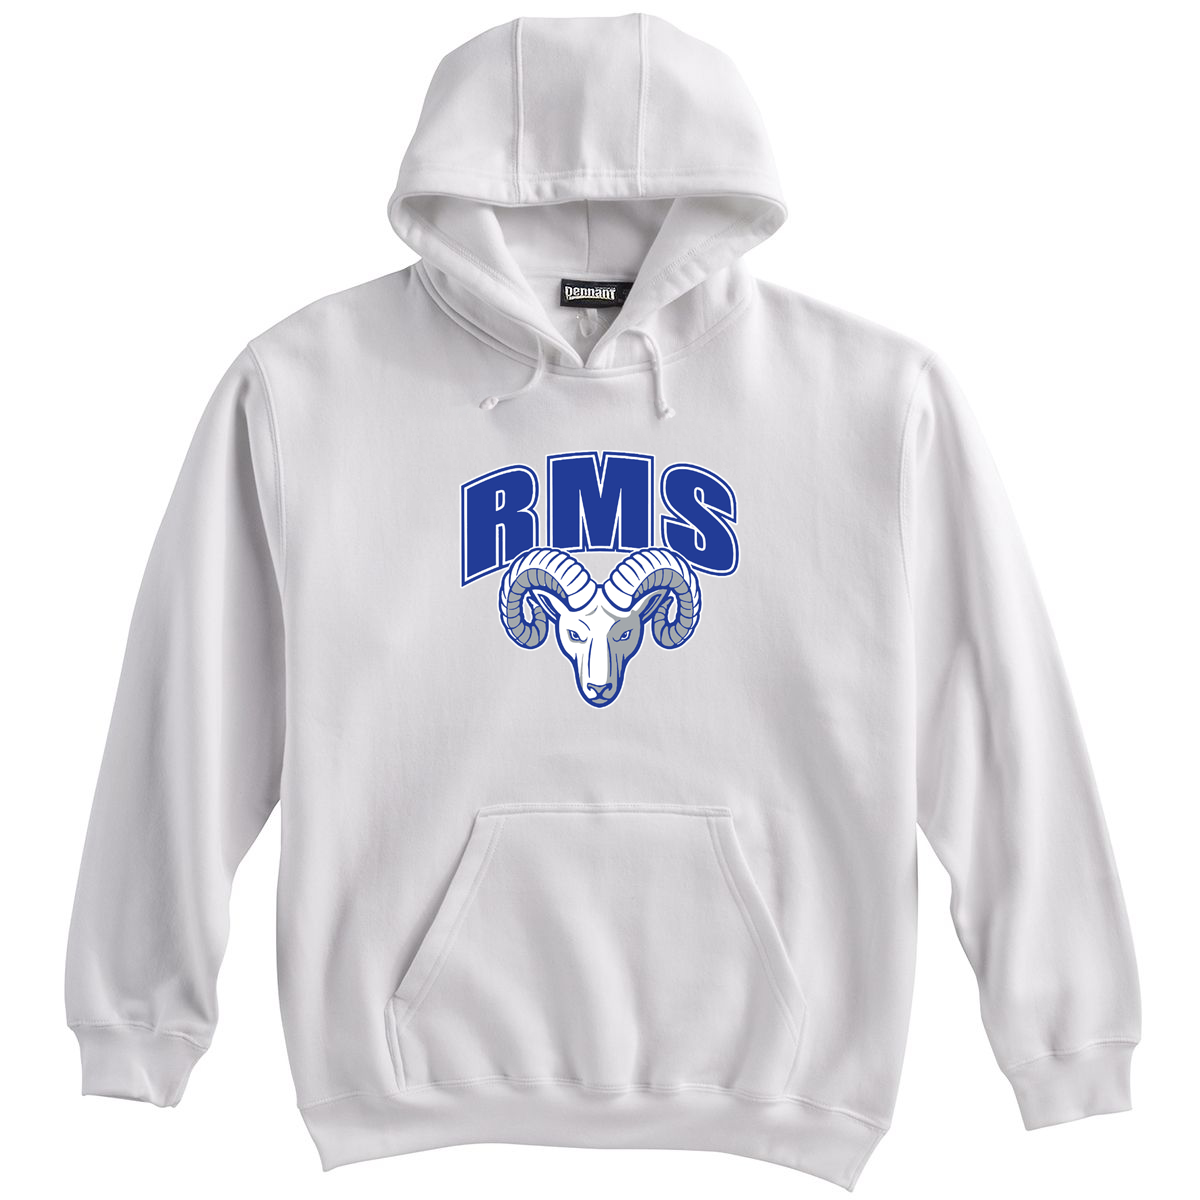 Rochambeau Middle School Sweatshirt